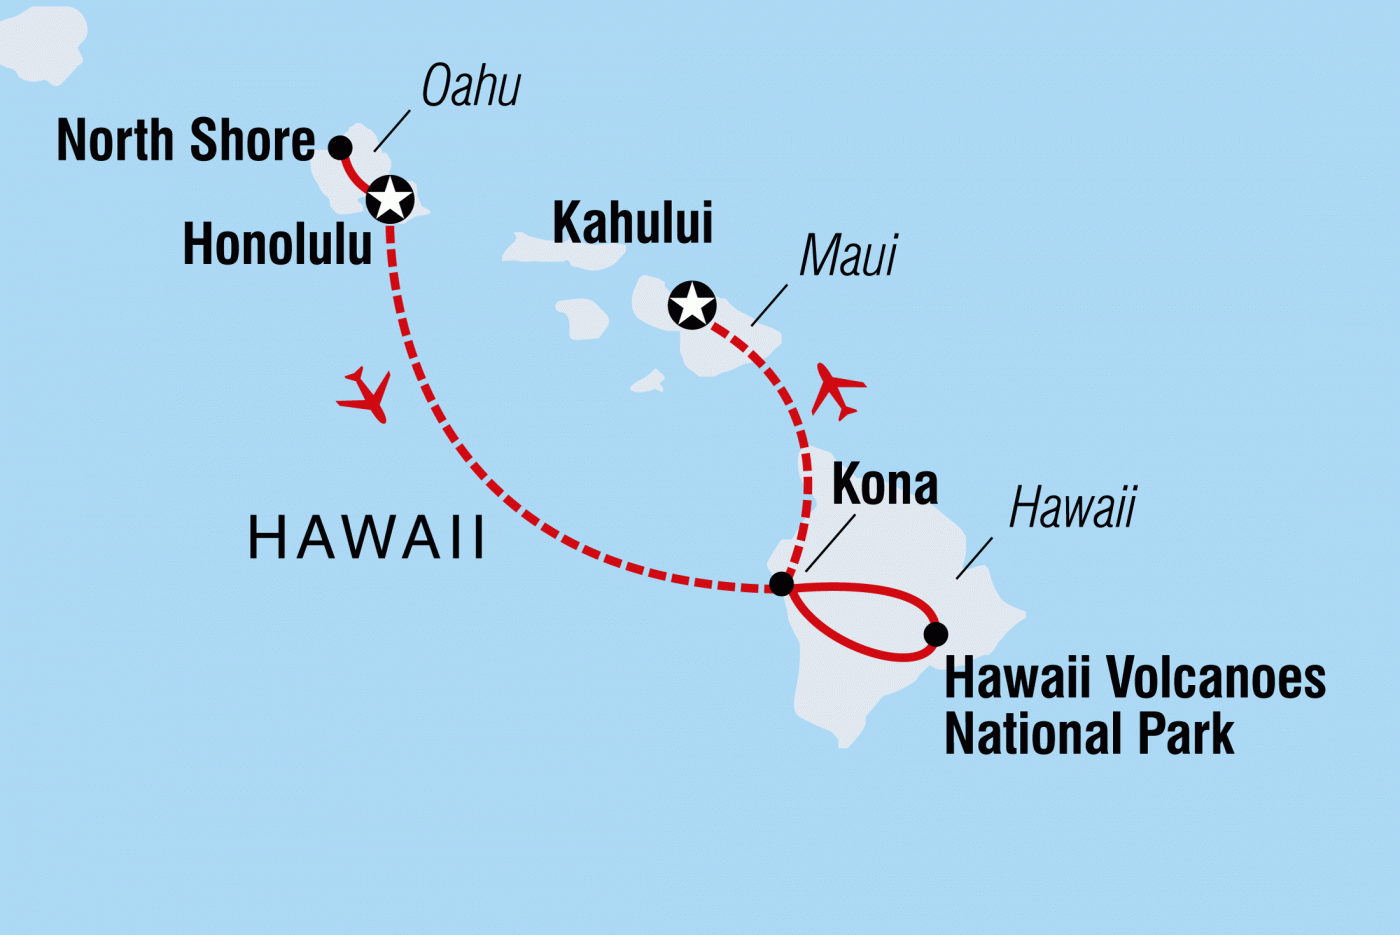 hawaii safe travels program app